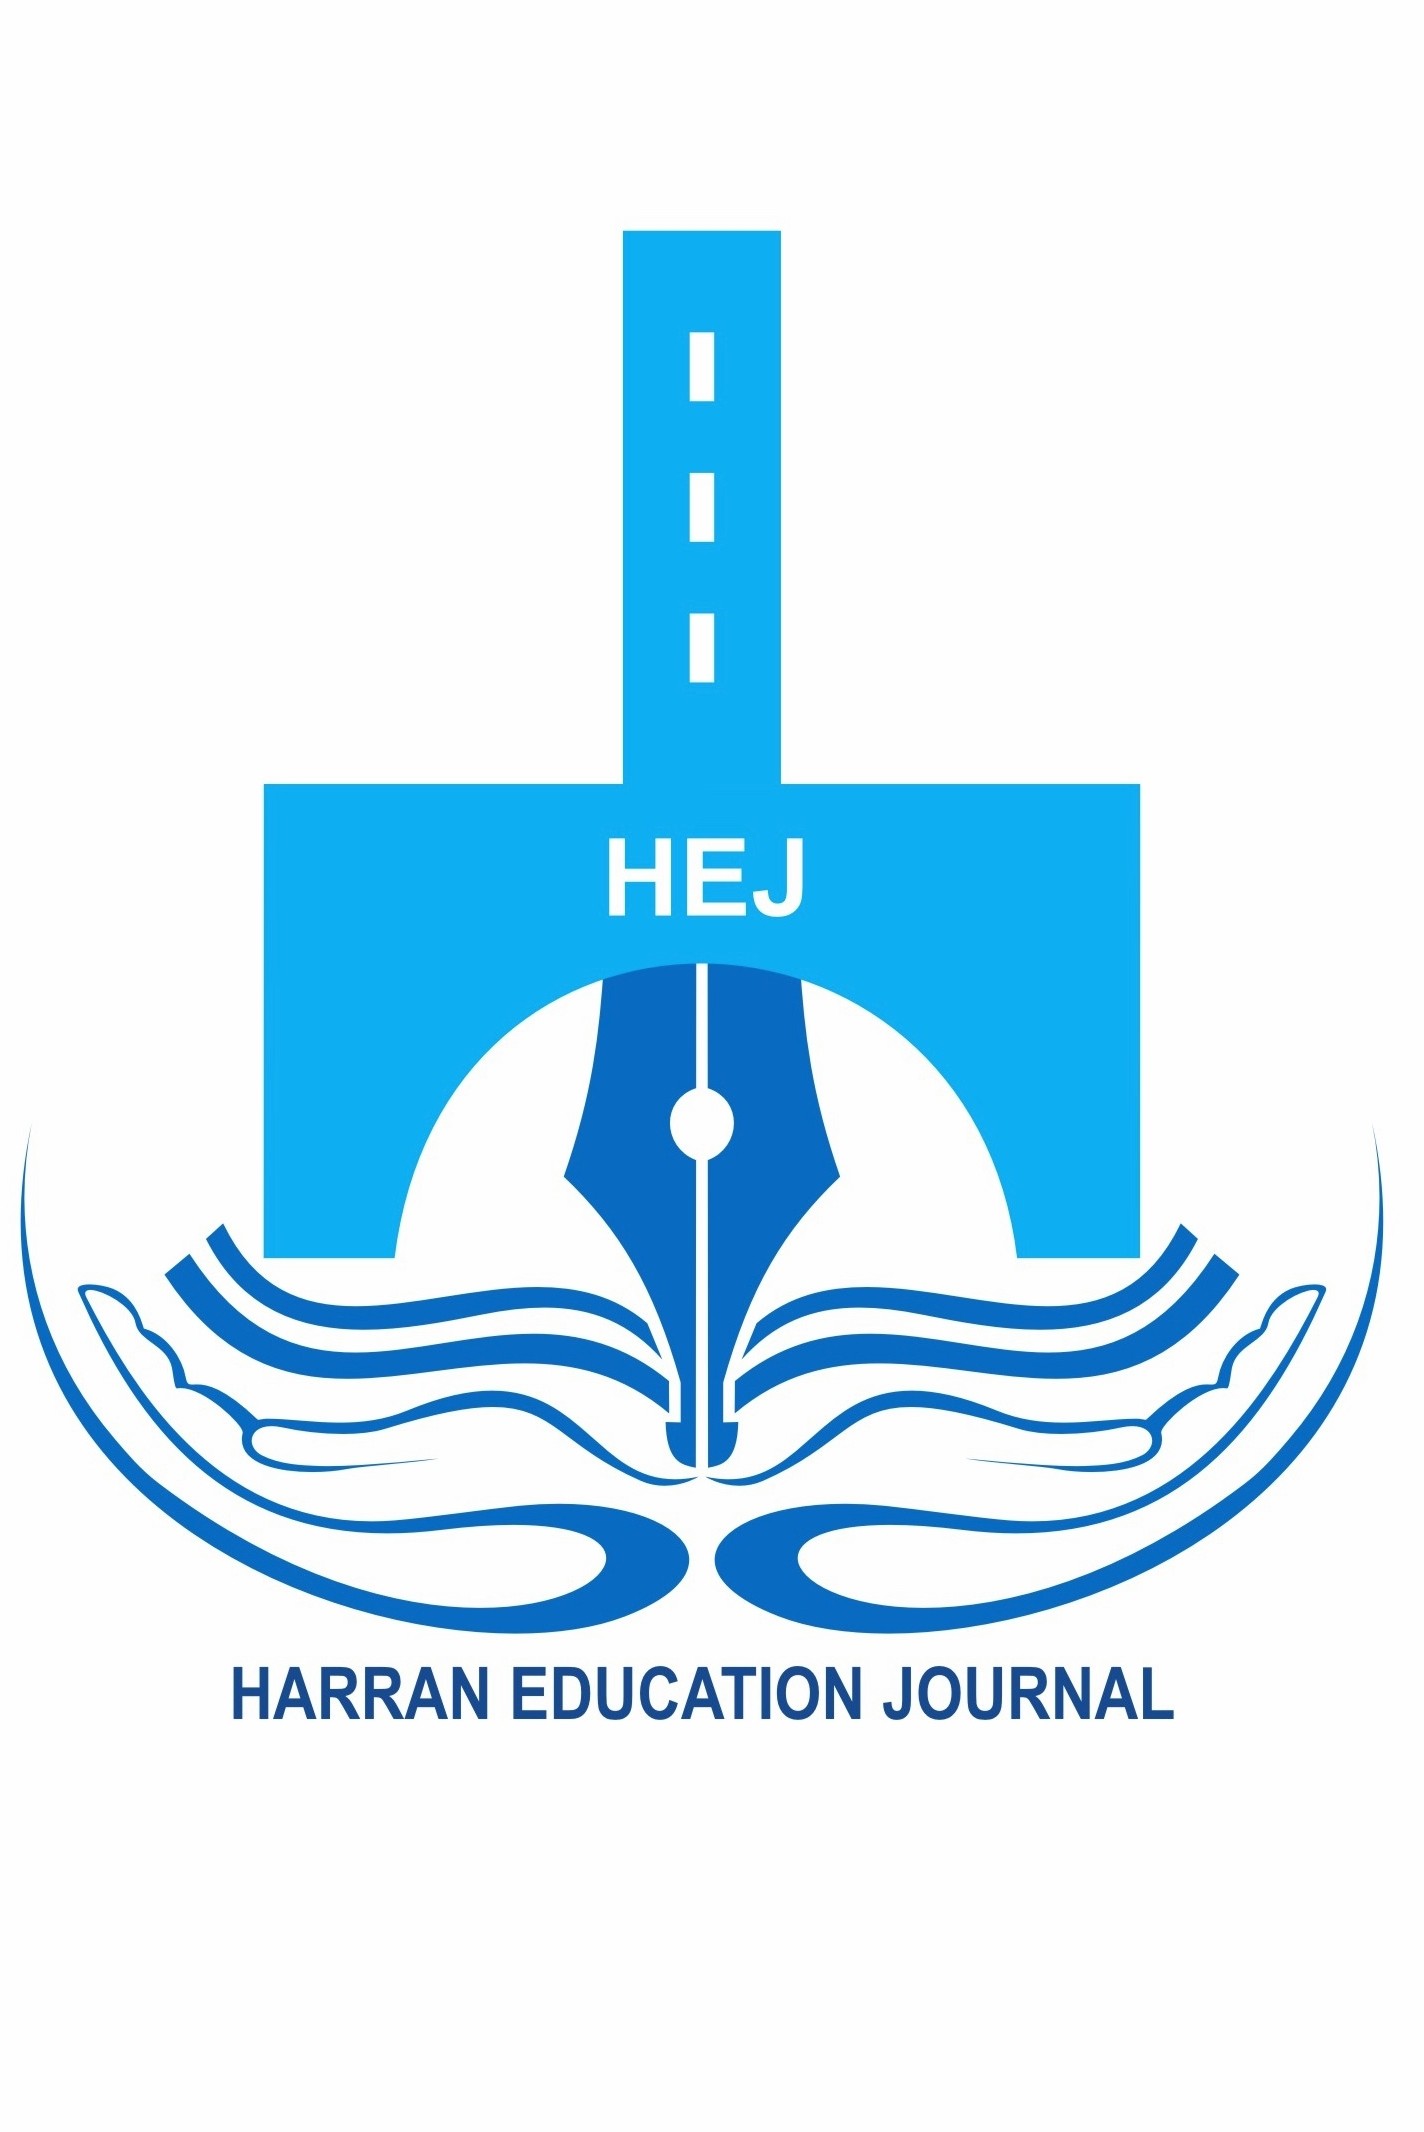 Harran Education Journal